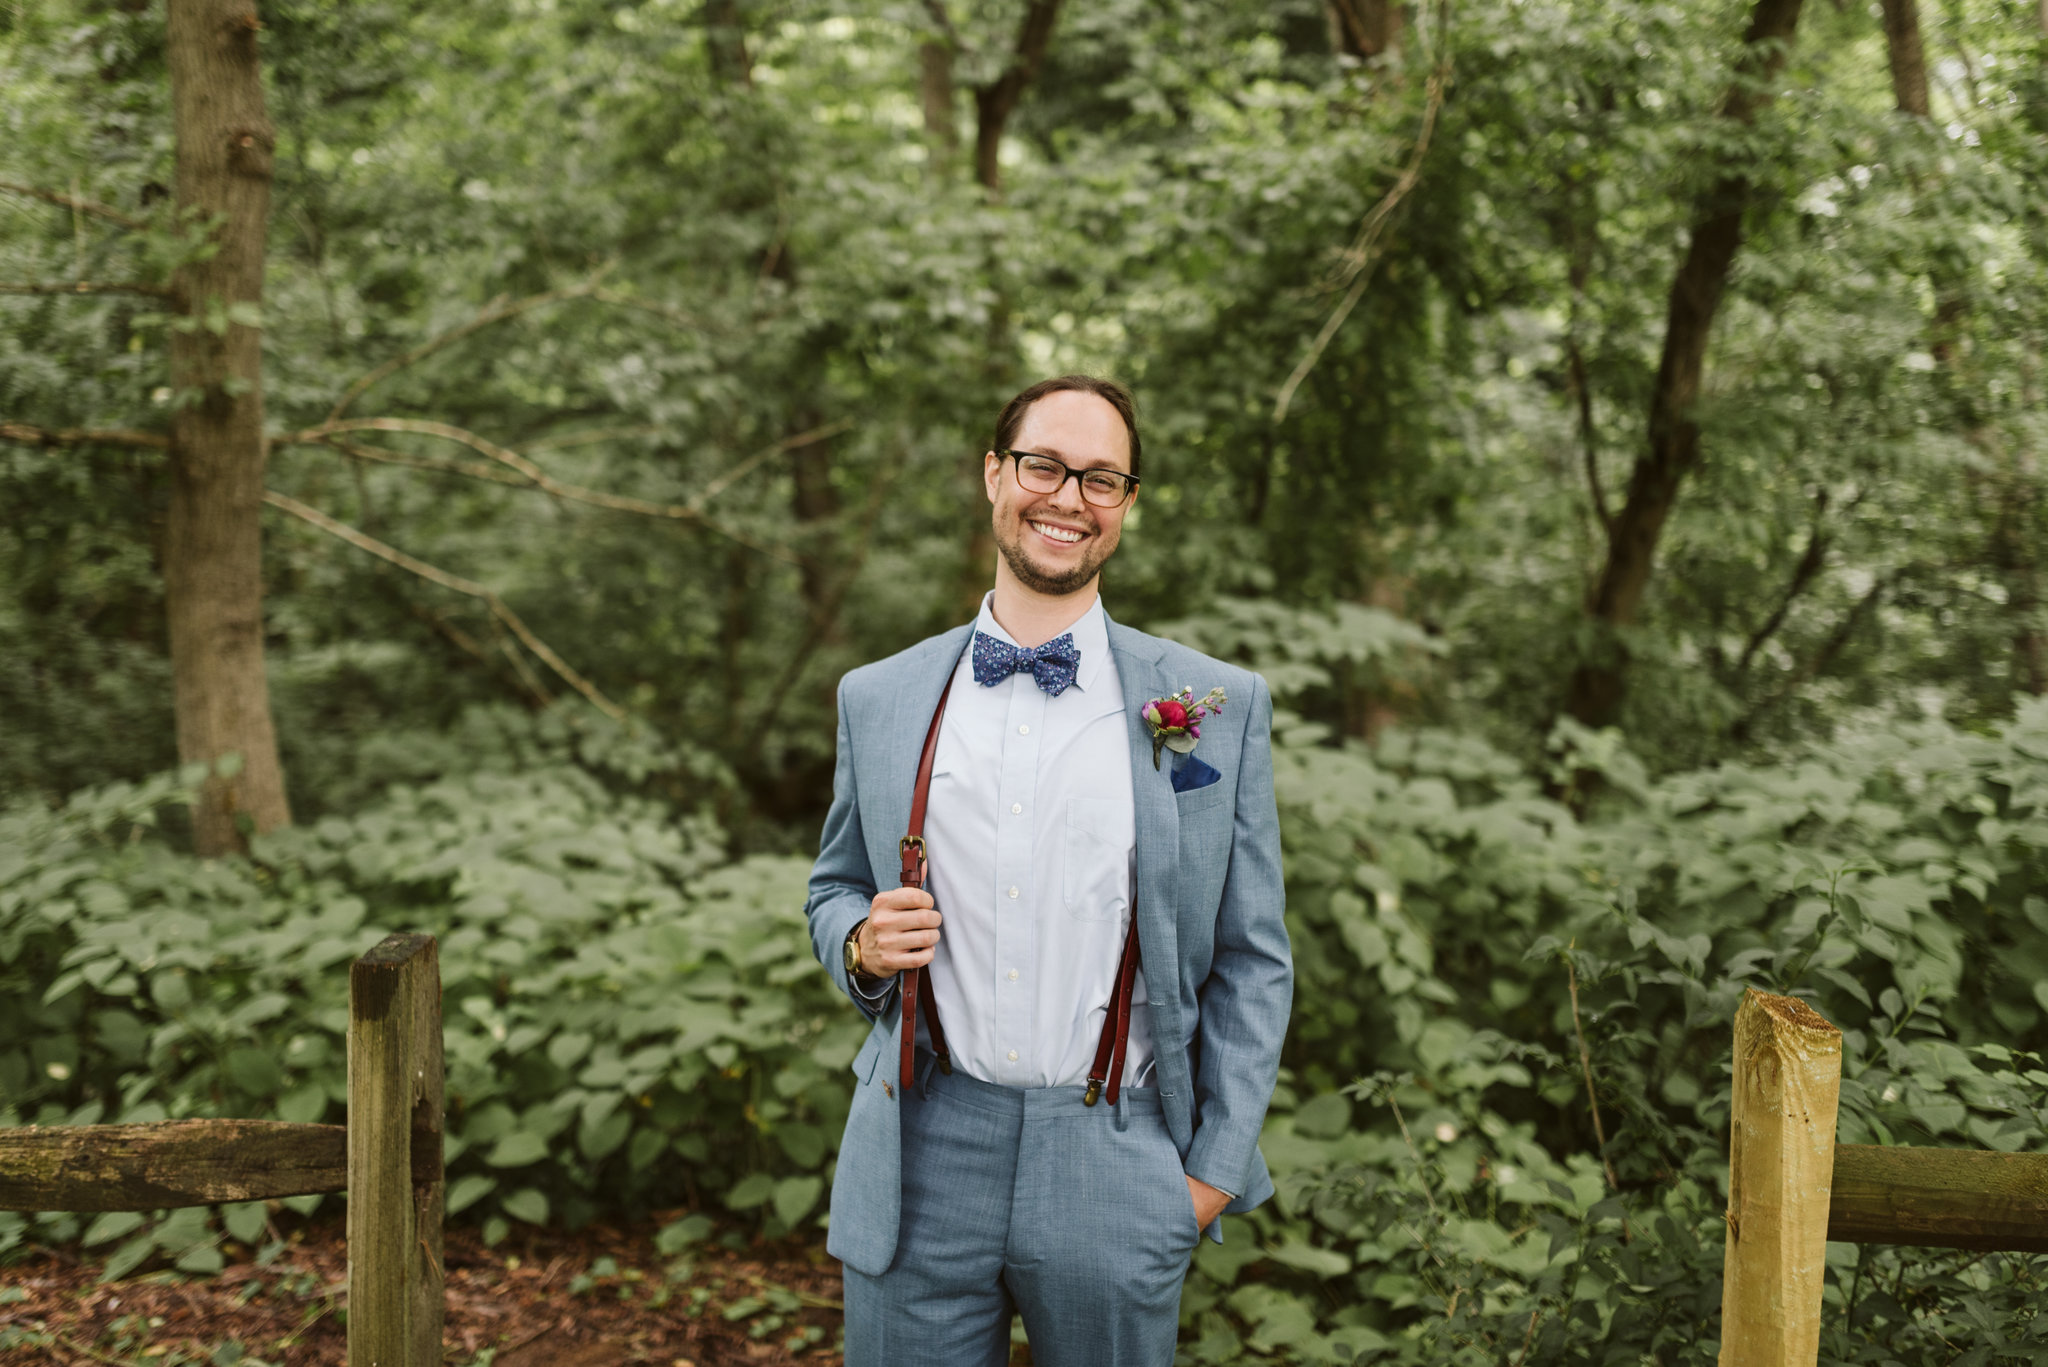  Annapolis, Quaker Wedding, Maryland Wedding Photographer, Intimate, Small Wedding, Vintage, DIY, Portrait of Groom, Groom Smiling, Bowtie and Suspenders 